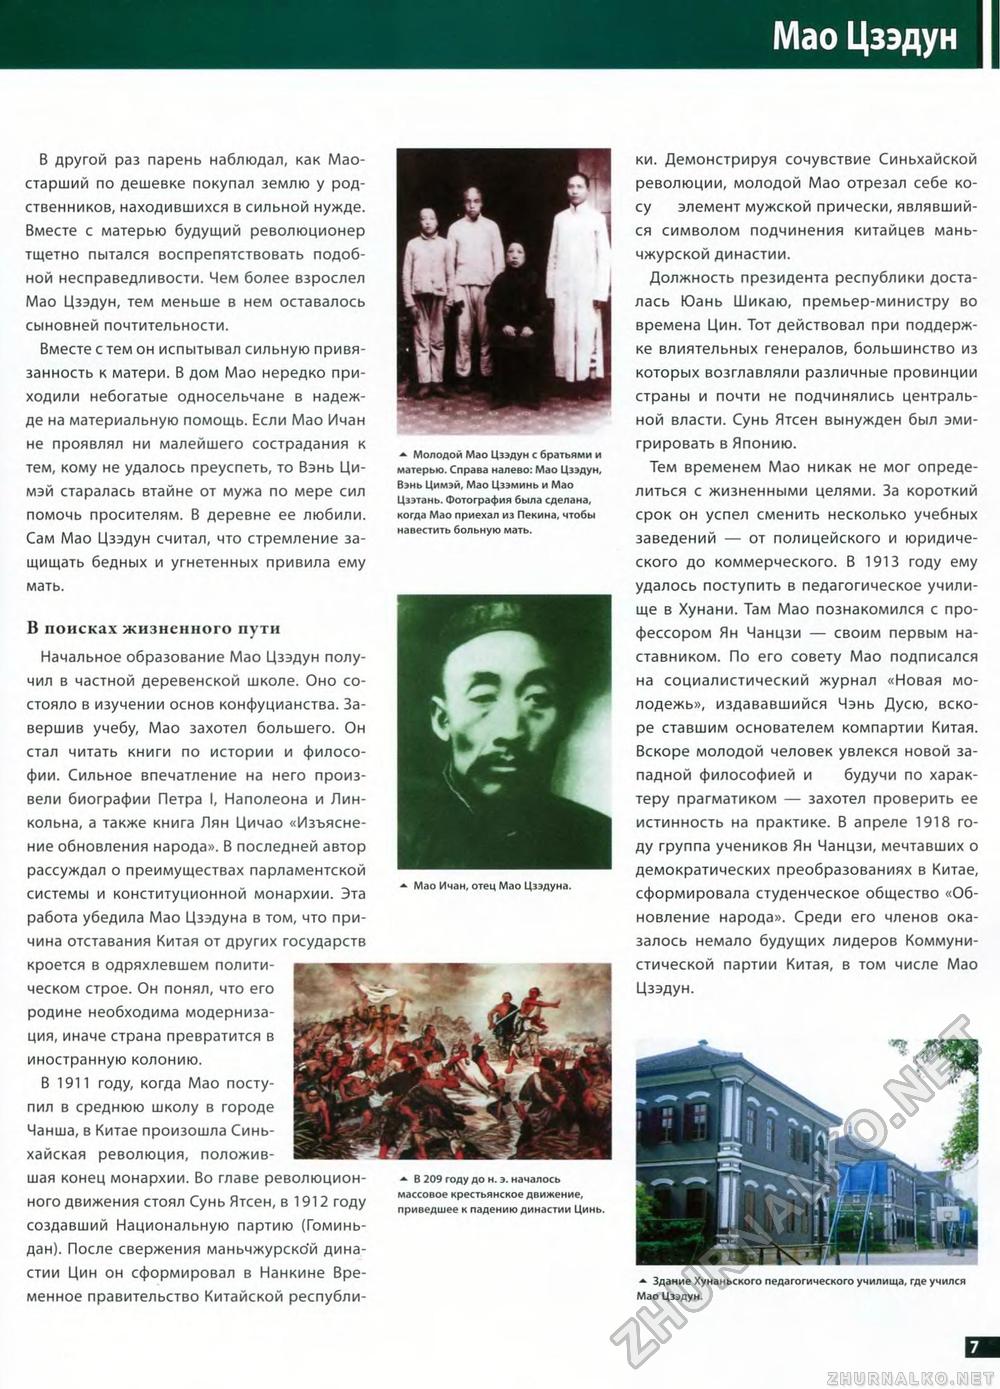 80. Мао Цзэдун, страница 7